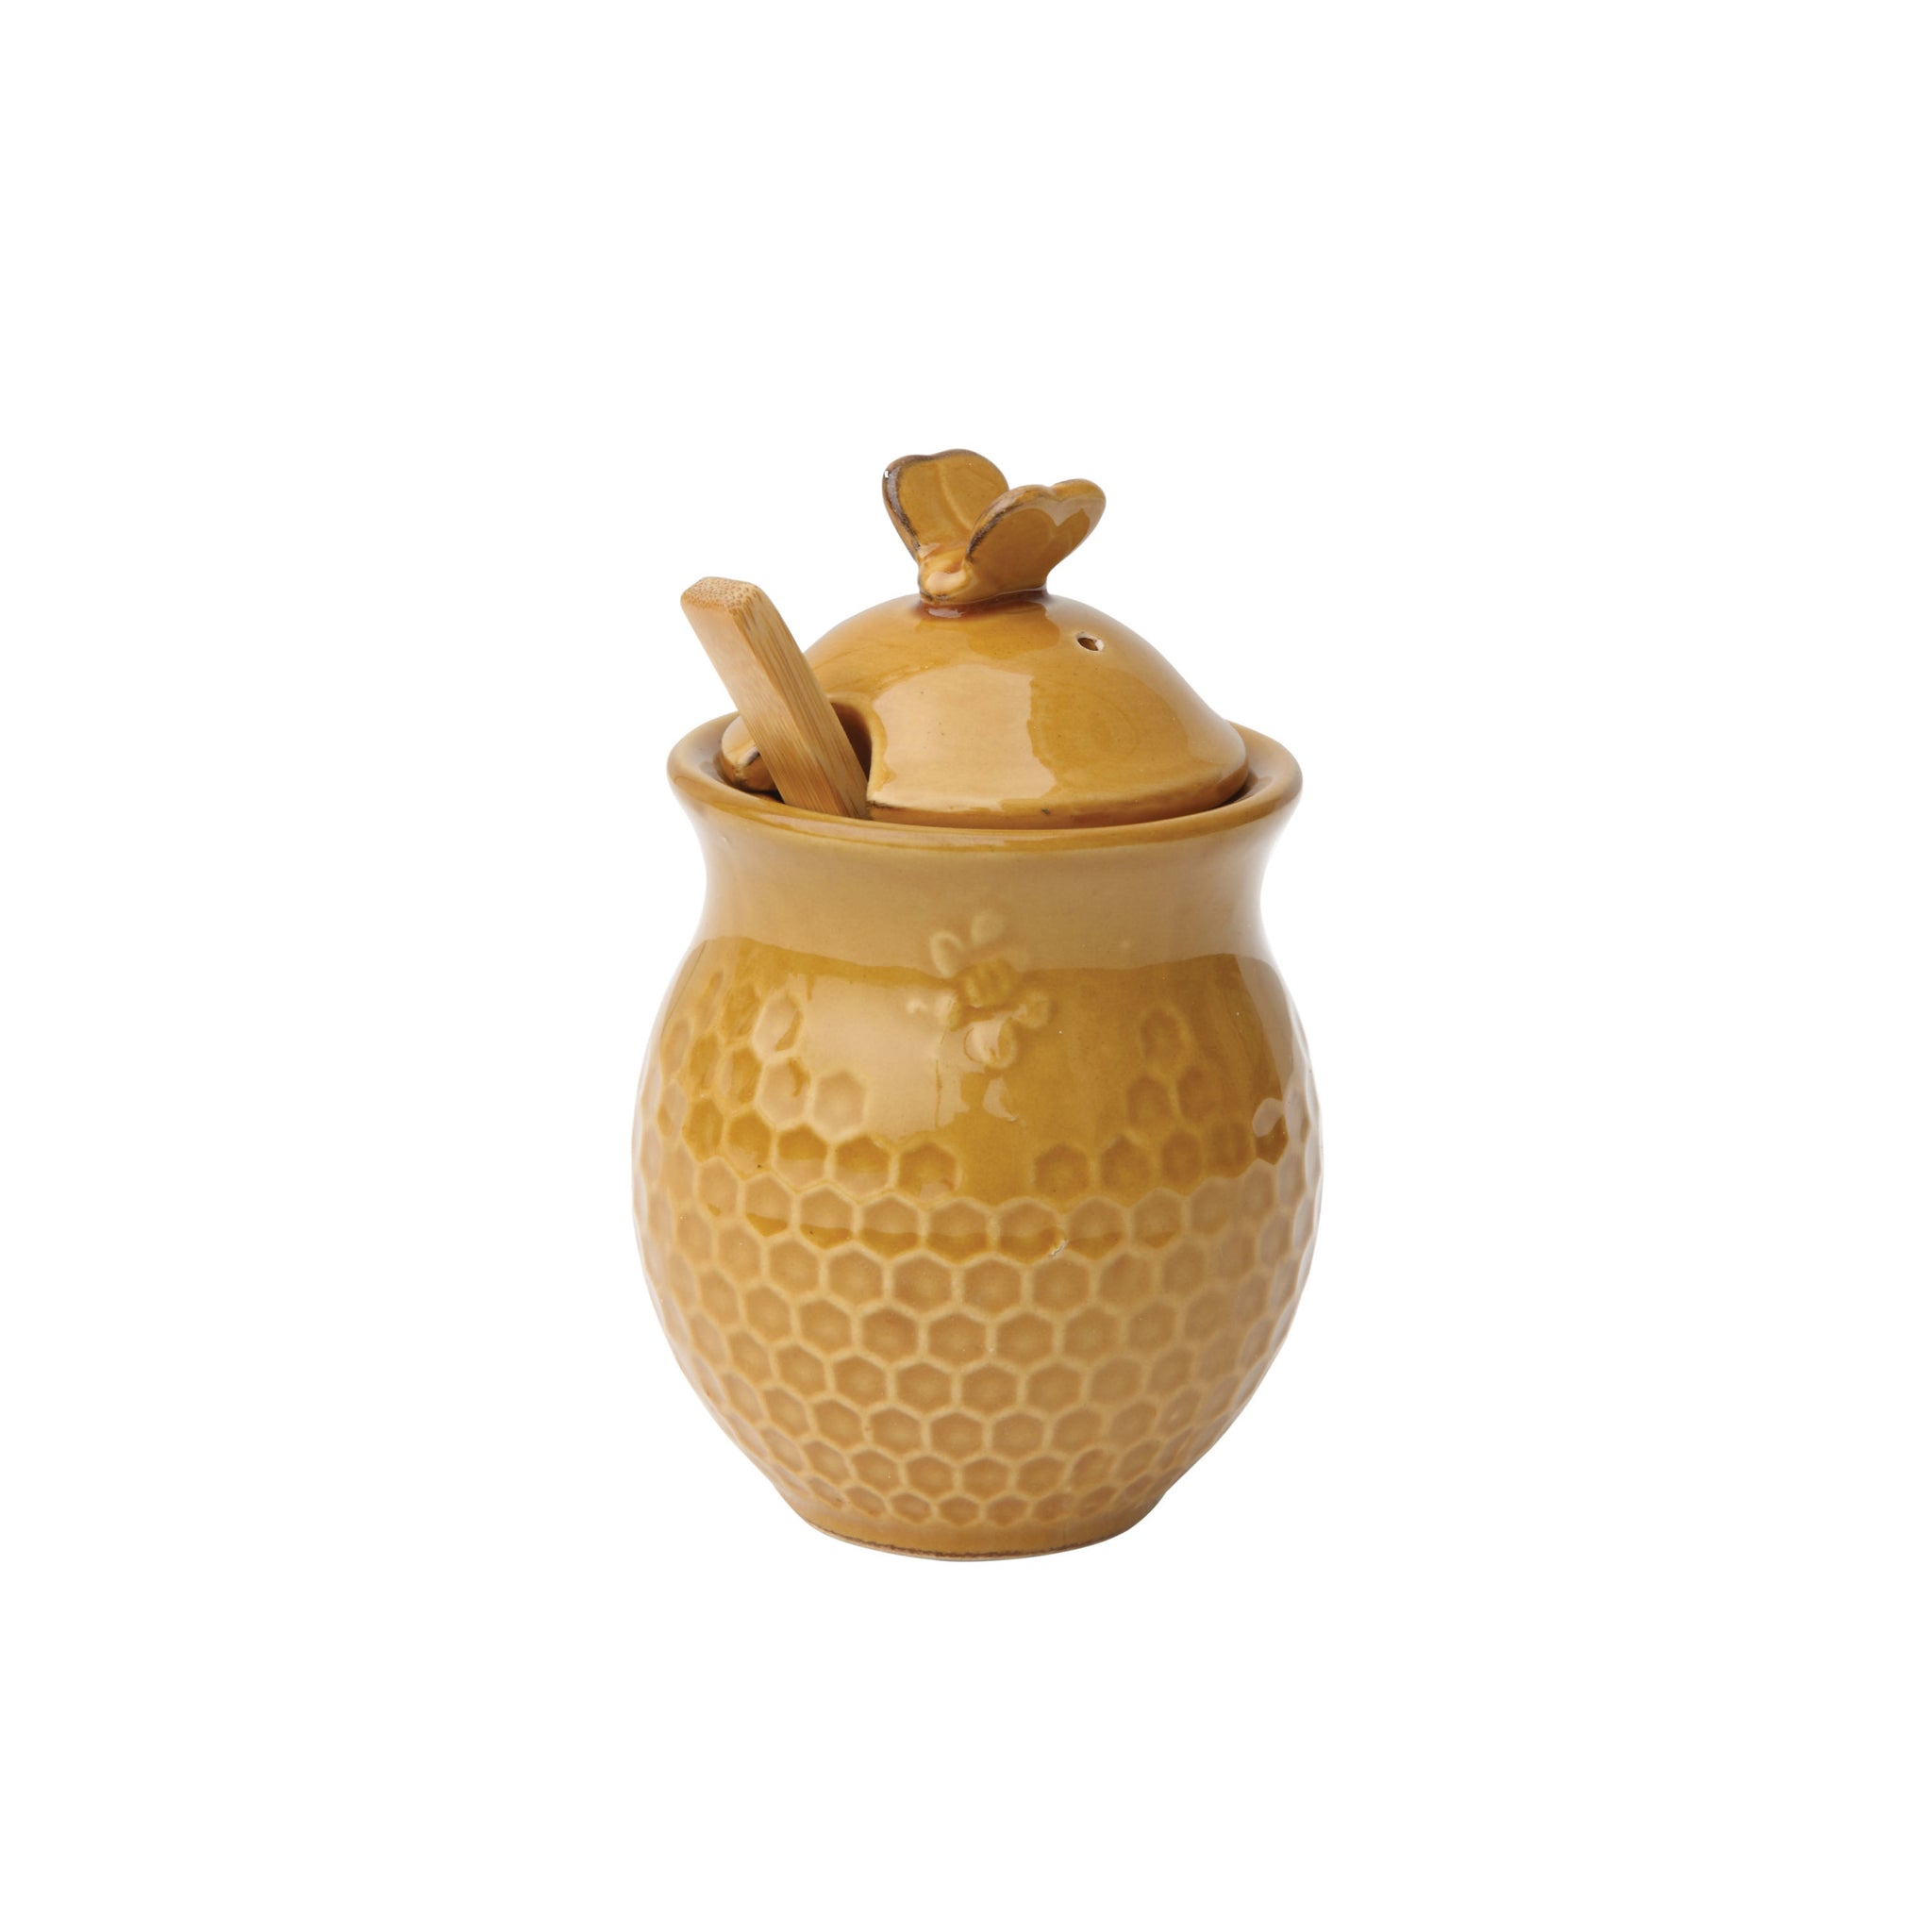 Ceramic Honey Pot with Dipper